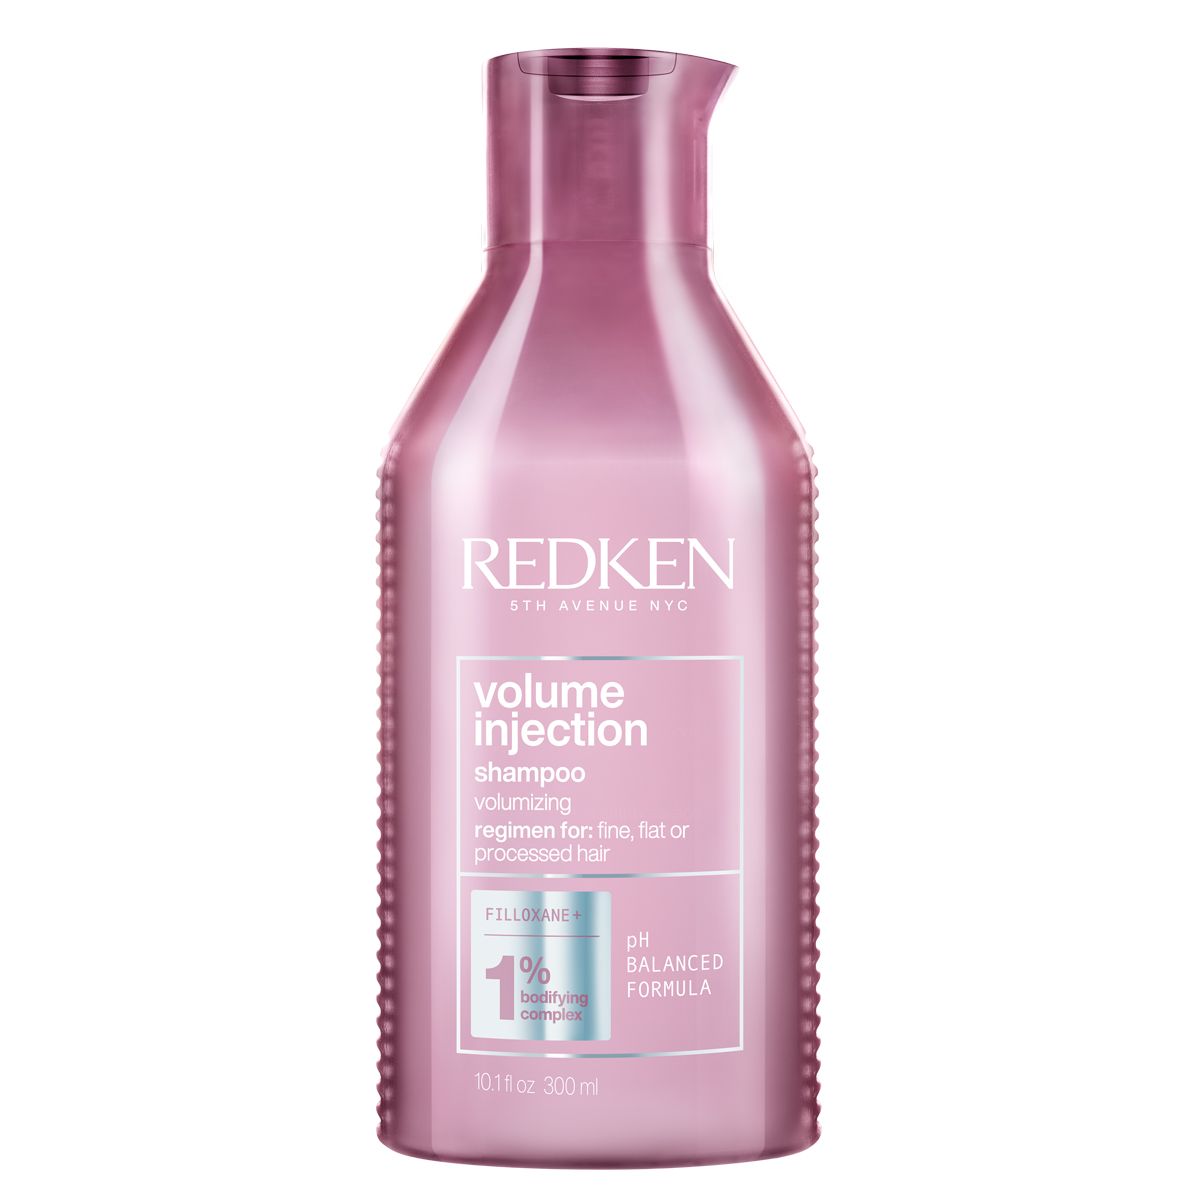 Redken Volume Injection - Шампунь для создания объёма 300 мл Redken (США) купить по цене 1 700 руб.